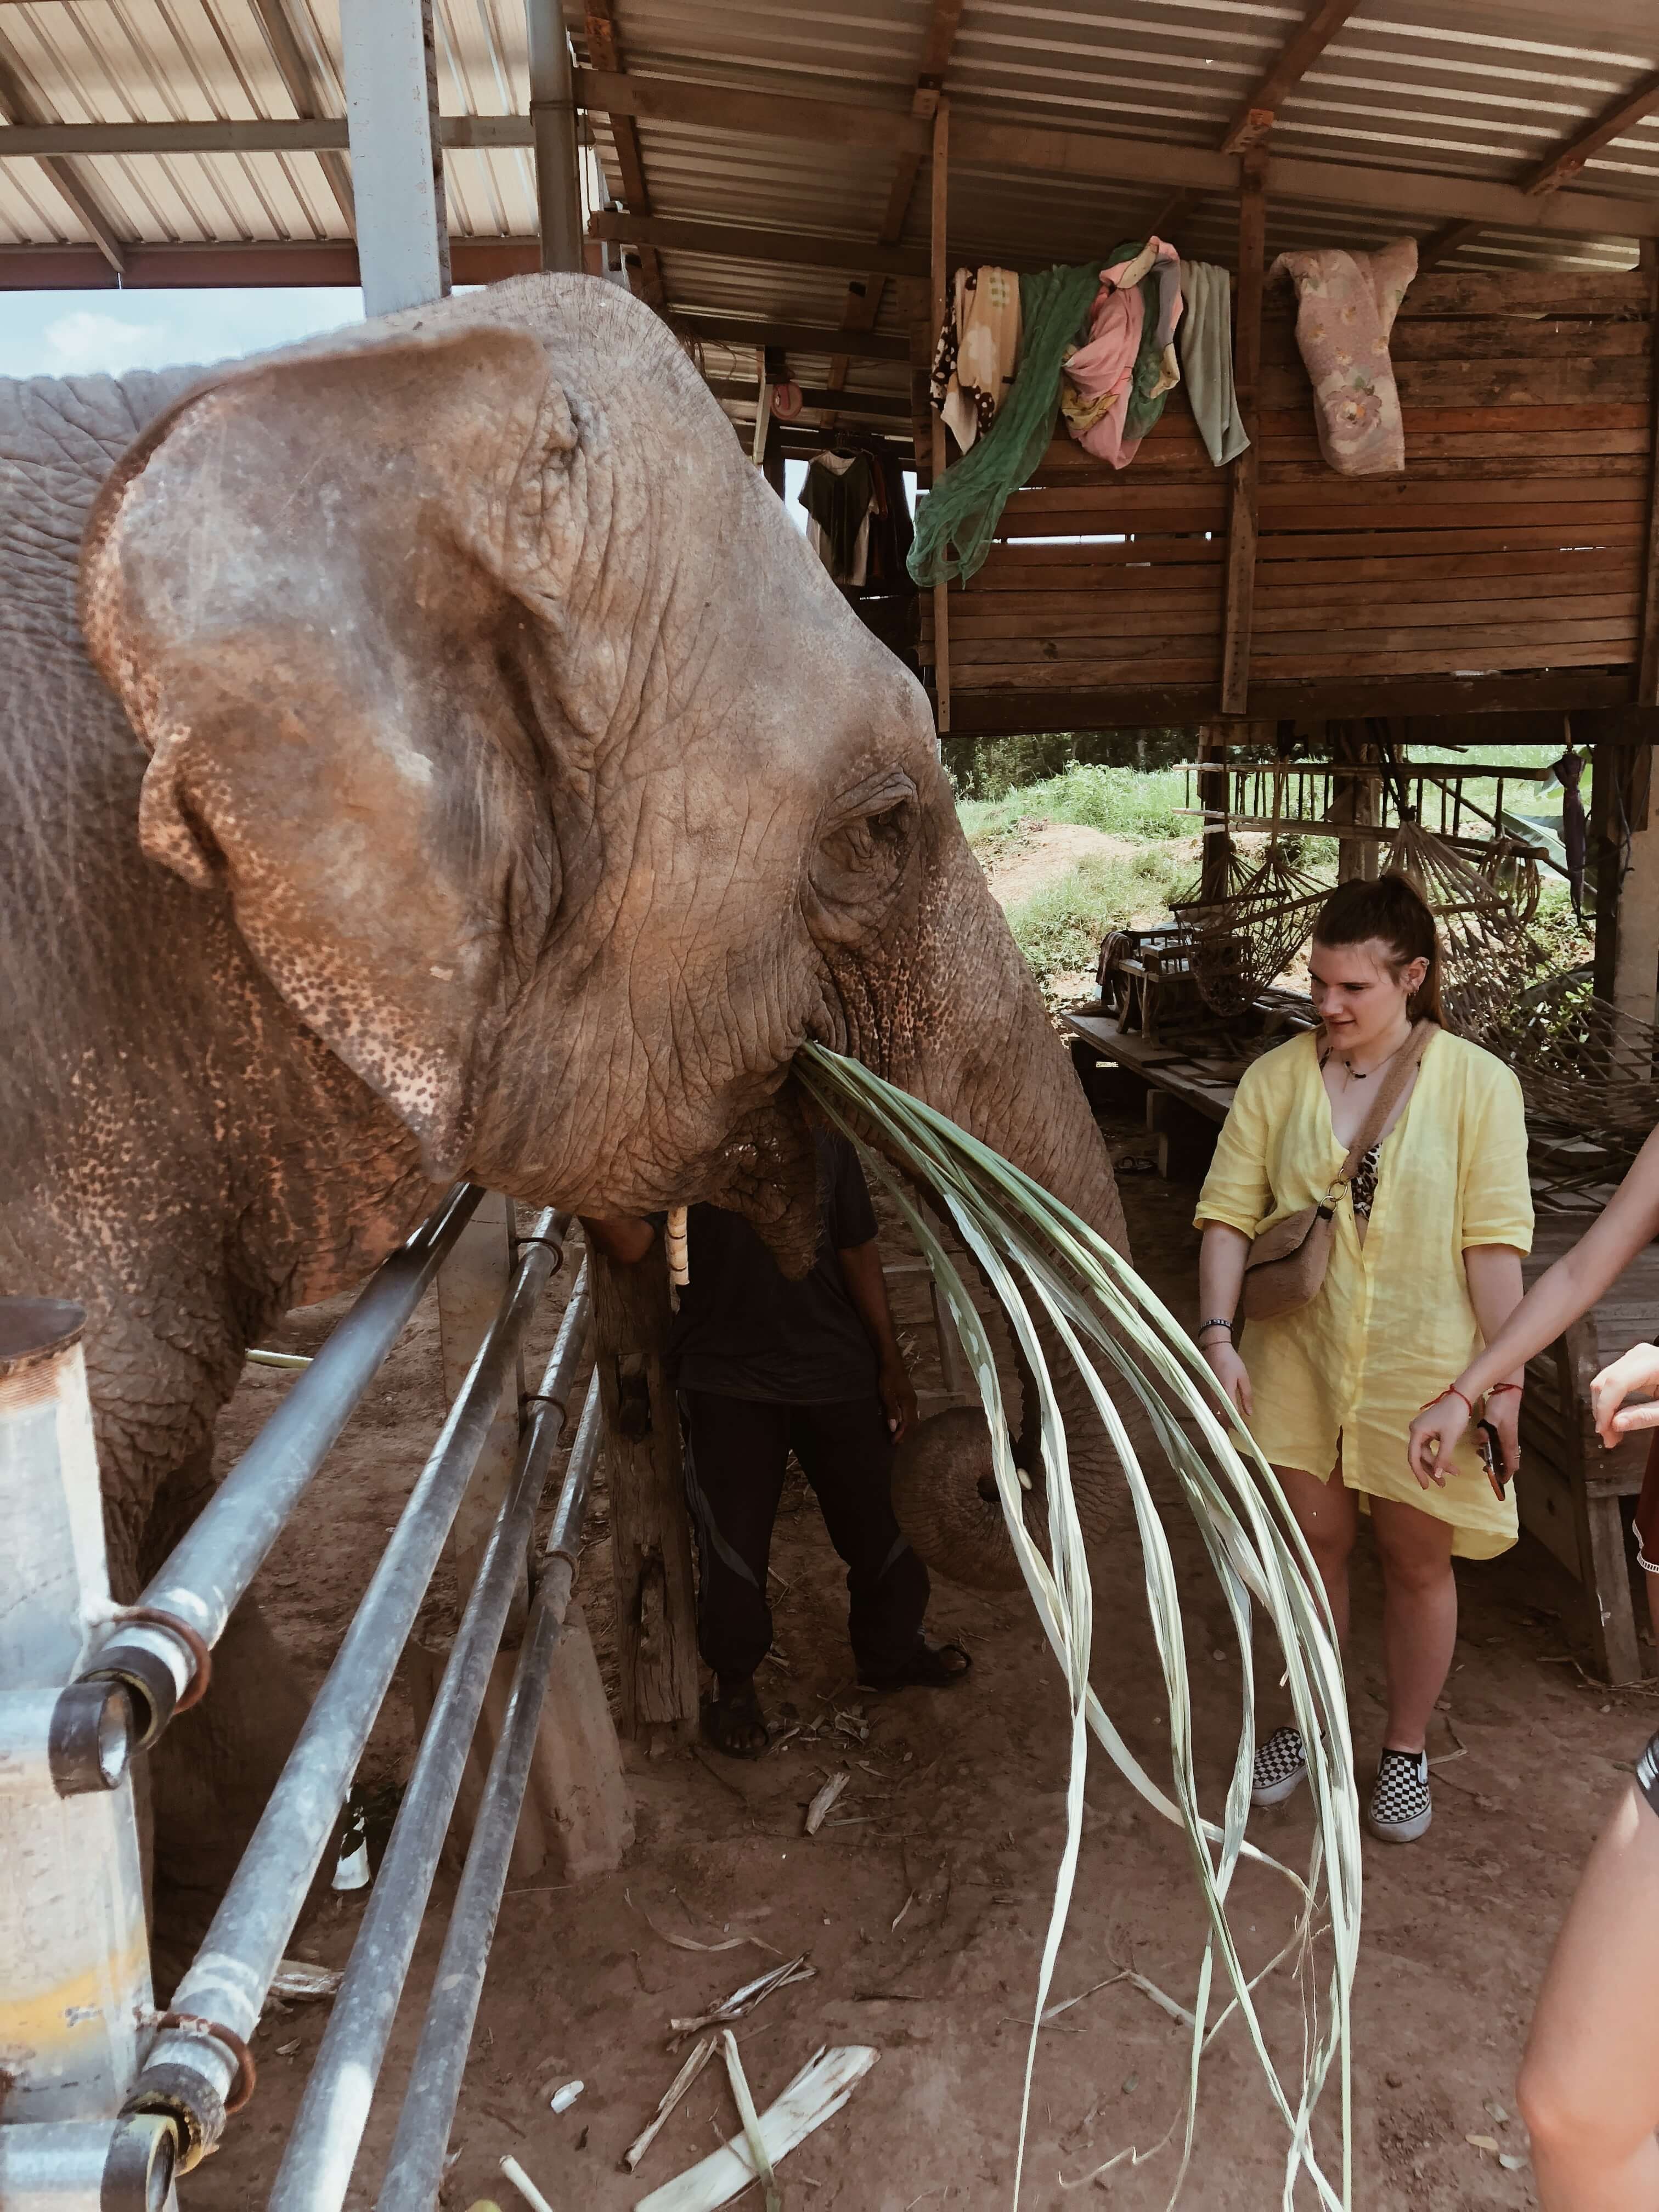 Volunteering in an elephant sanctuary - Surin, Thailand